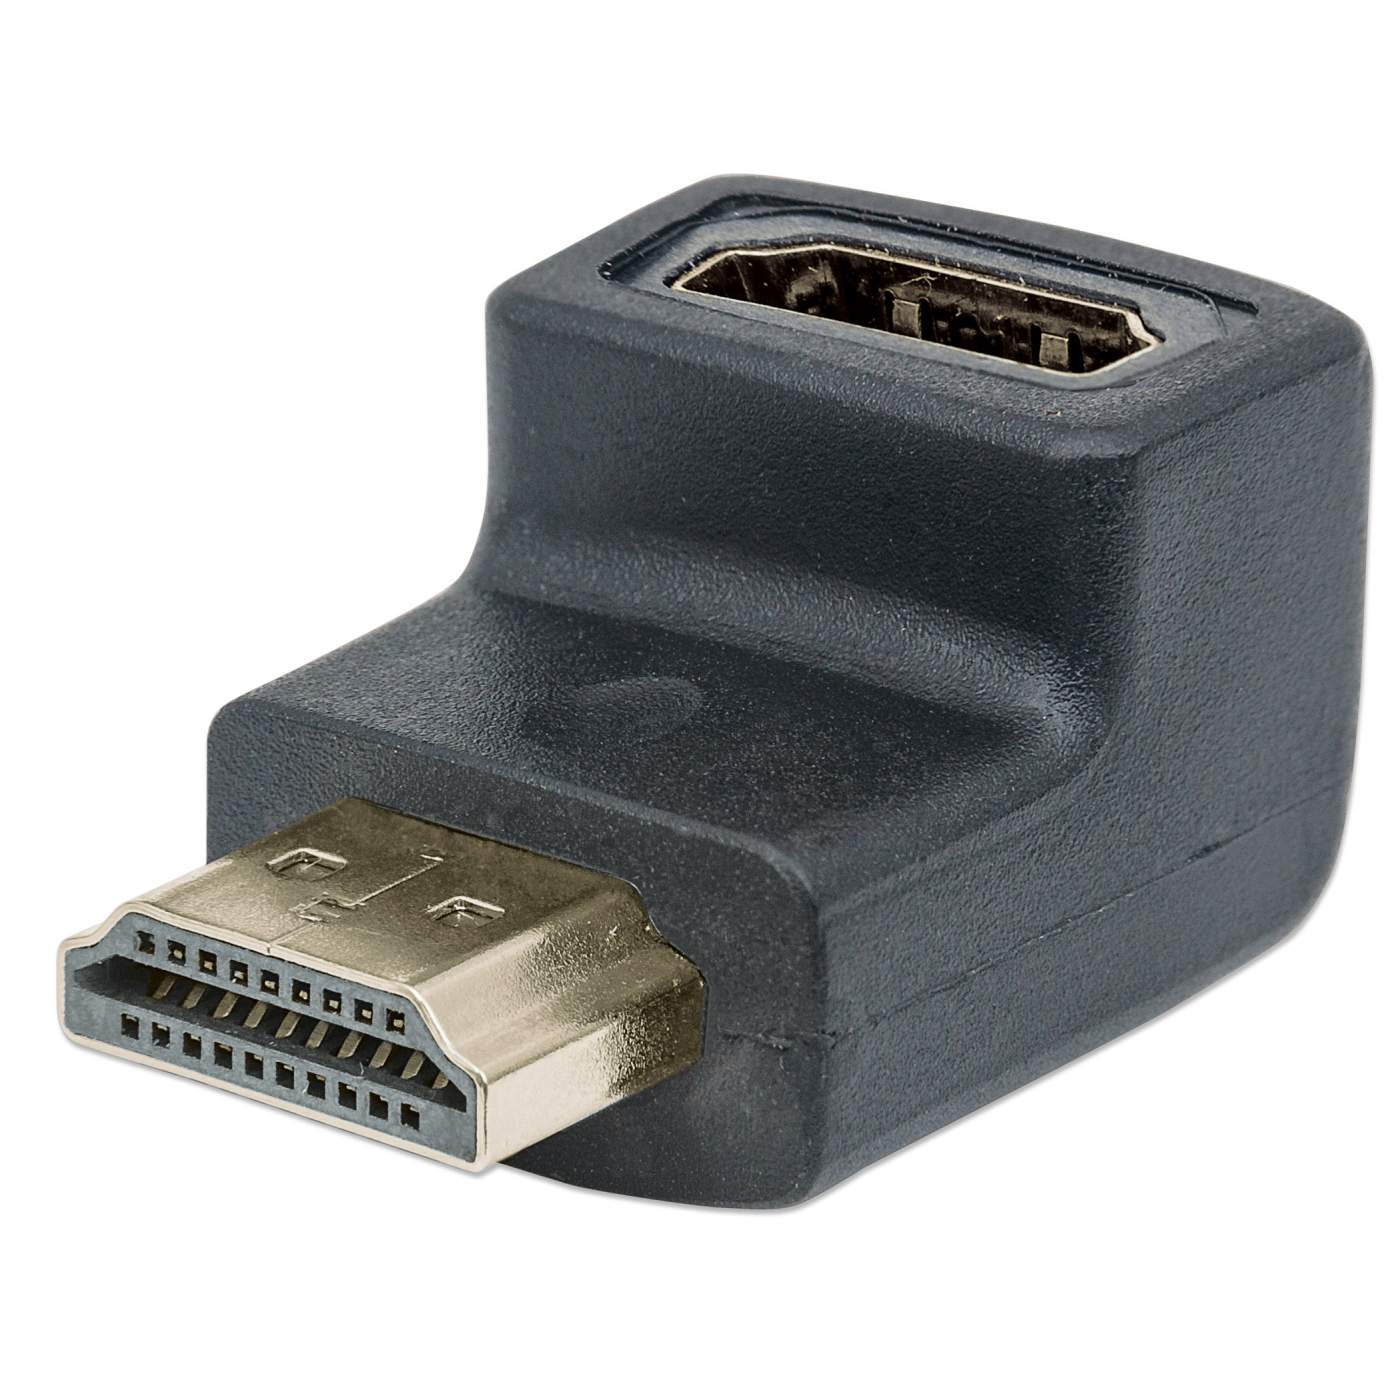 HDMI Adapter Image 1